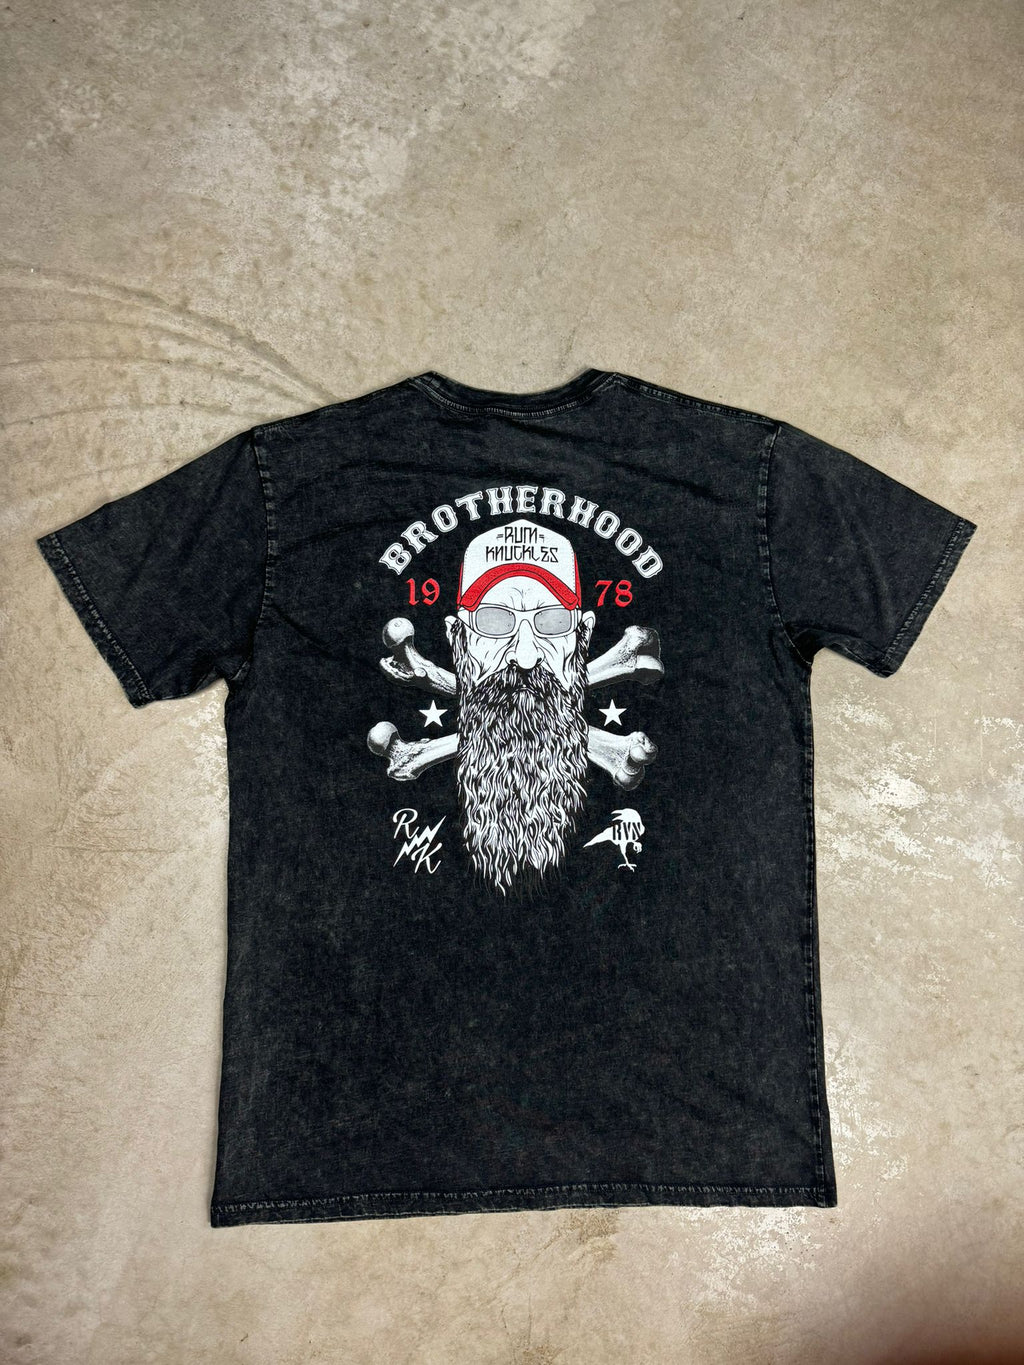 'Brotherhood' T-shirt